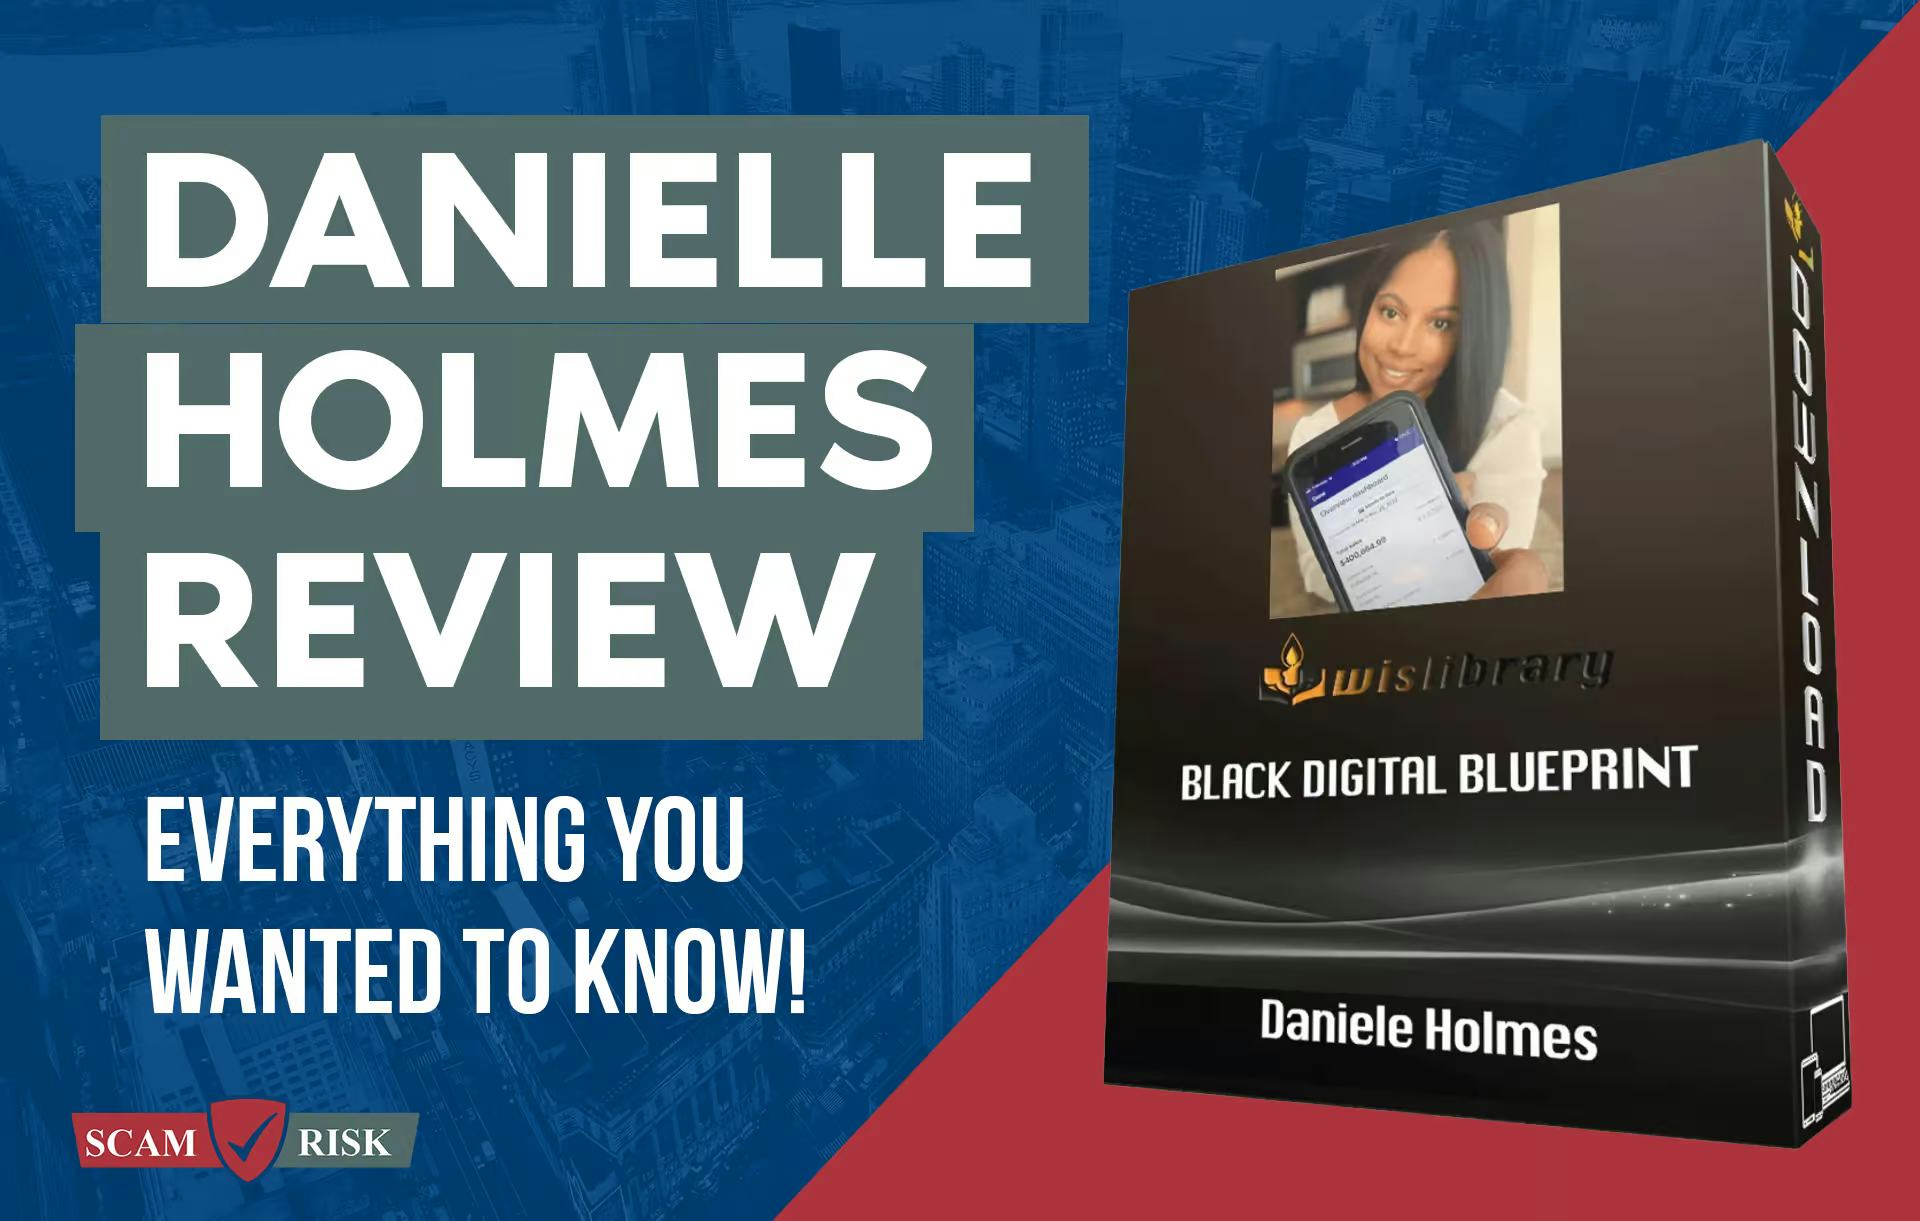 Danielle Holmes Review: Is Black Digital Blueprint Legit?